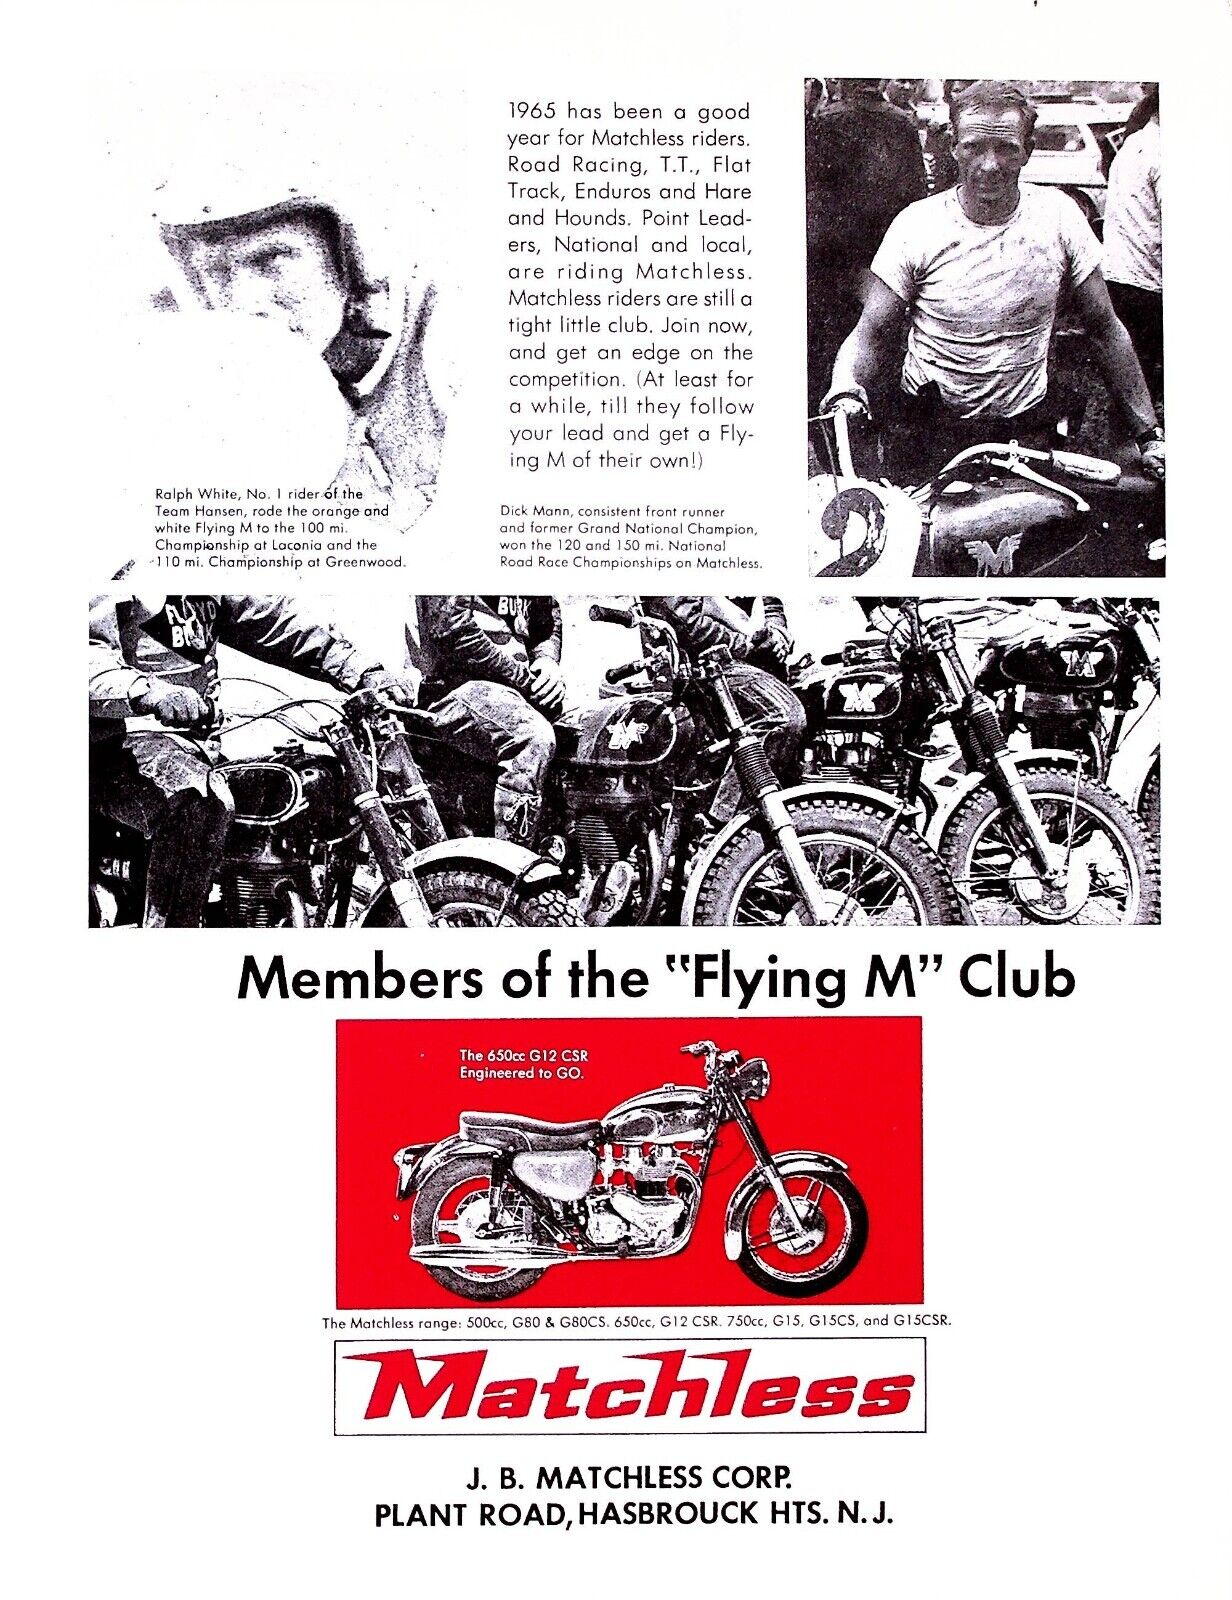 1965 Matchless Dick Mann Ralph White 650cc G12 CSR - Vintage Motorcycle Ad